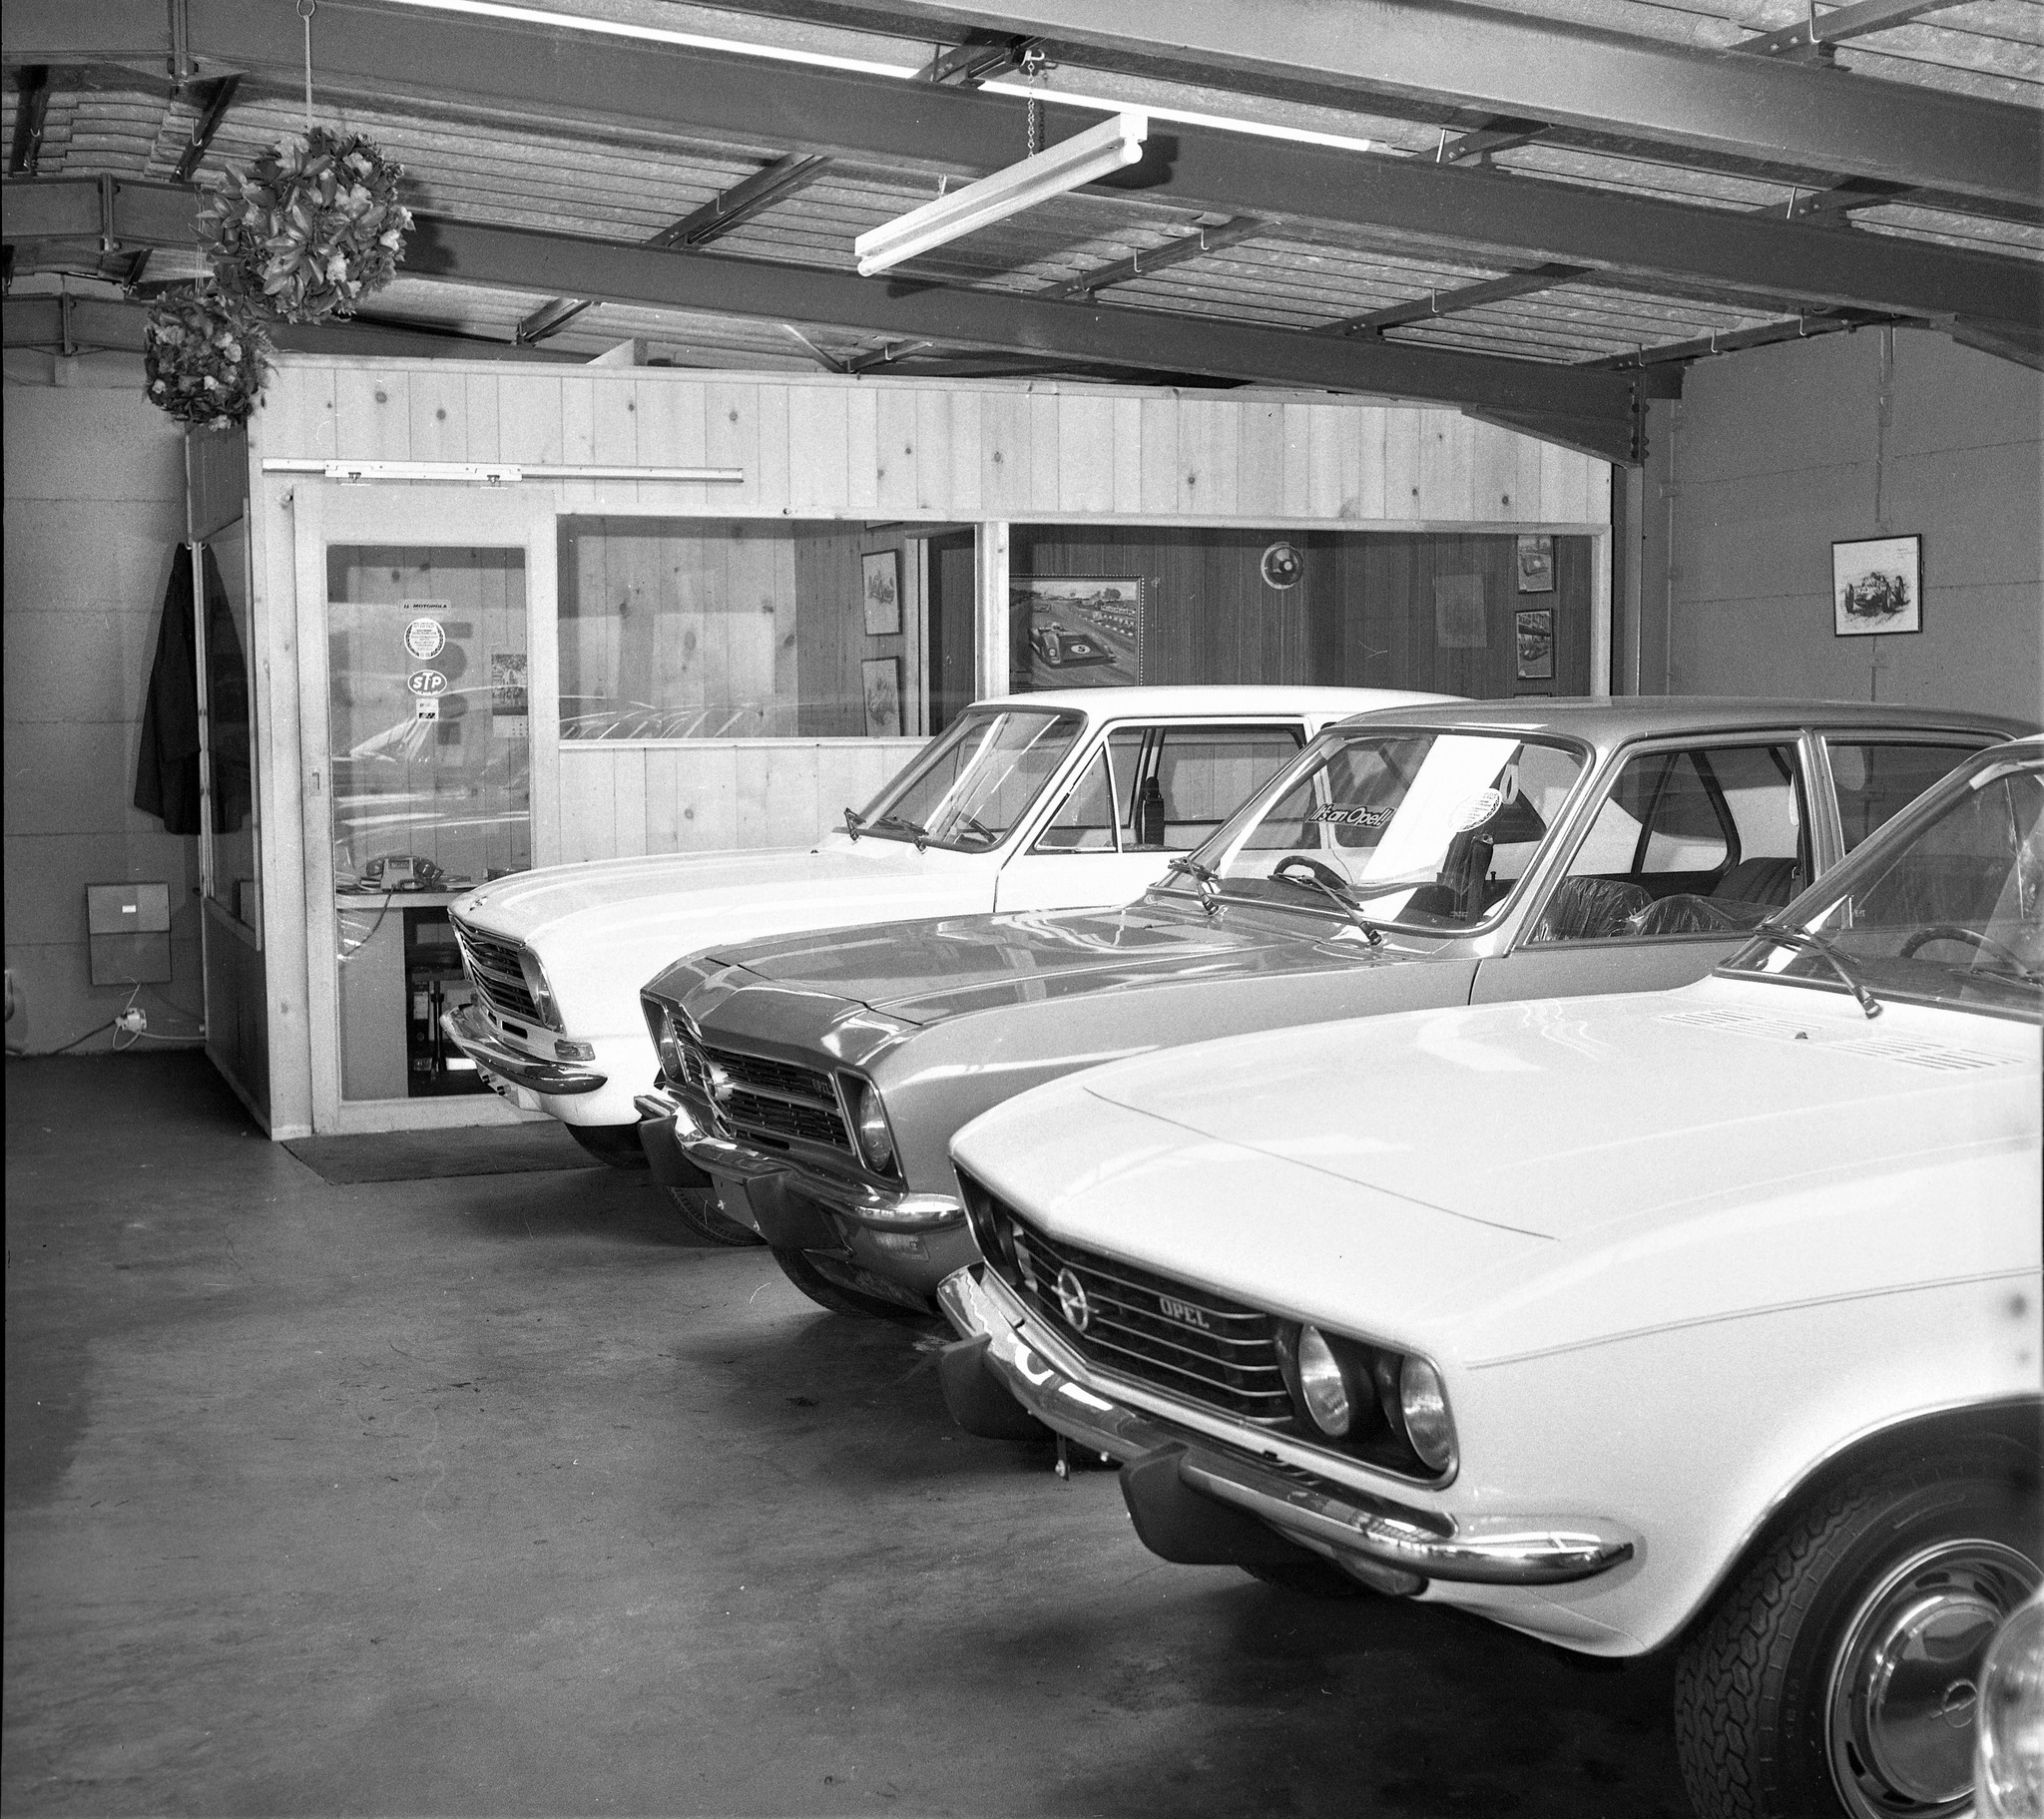 Rhostyllen Motor Company showroom, 1973. It was here Local Bygones member Shaun Jones bought their first ever car, a beige Morris Ital.